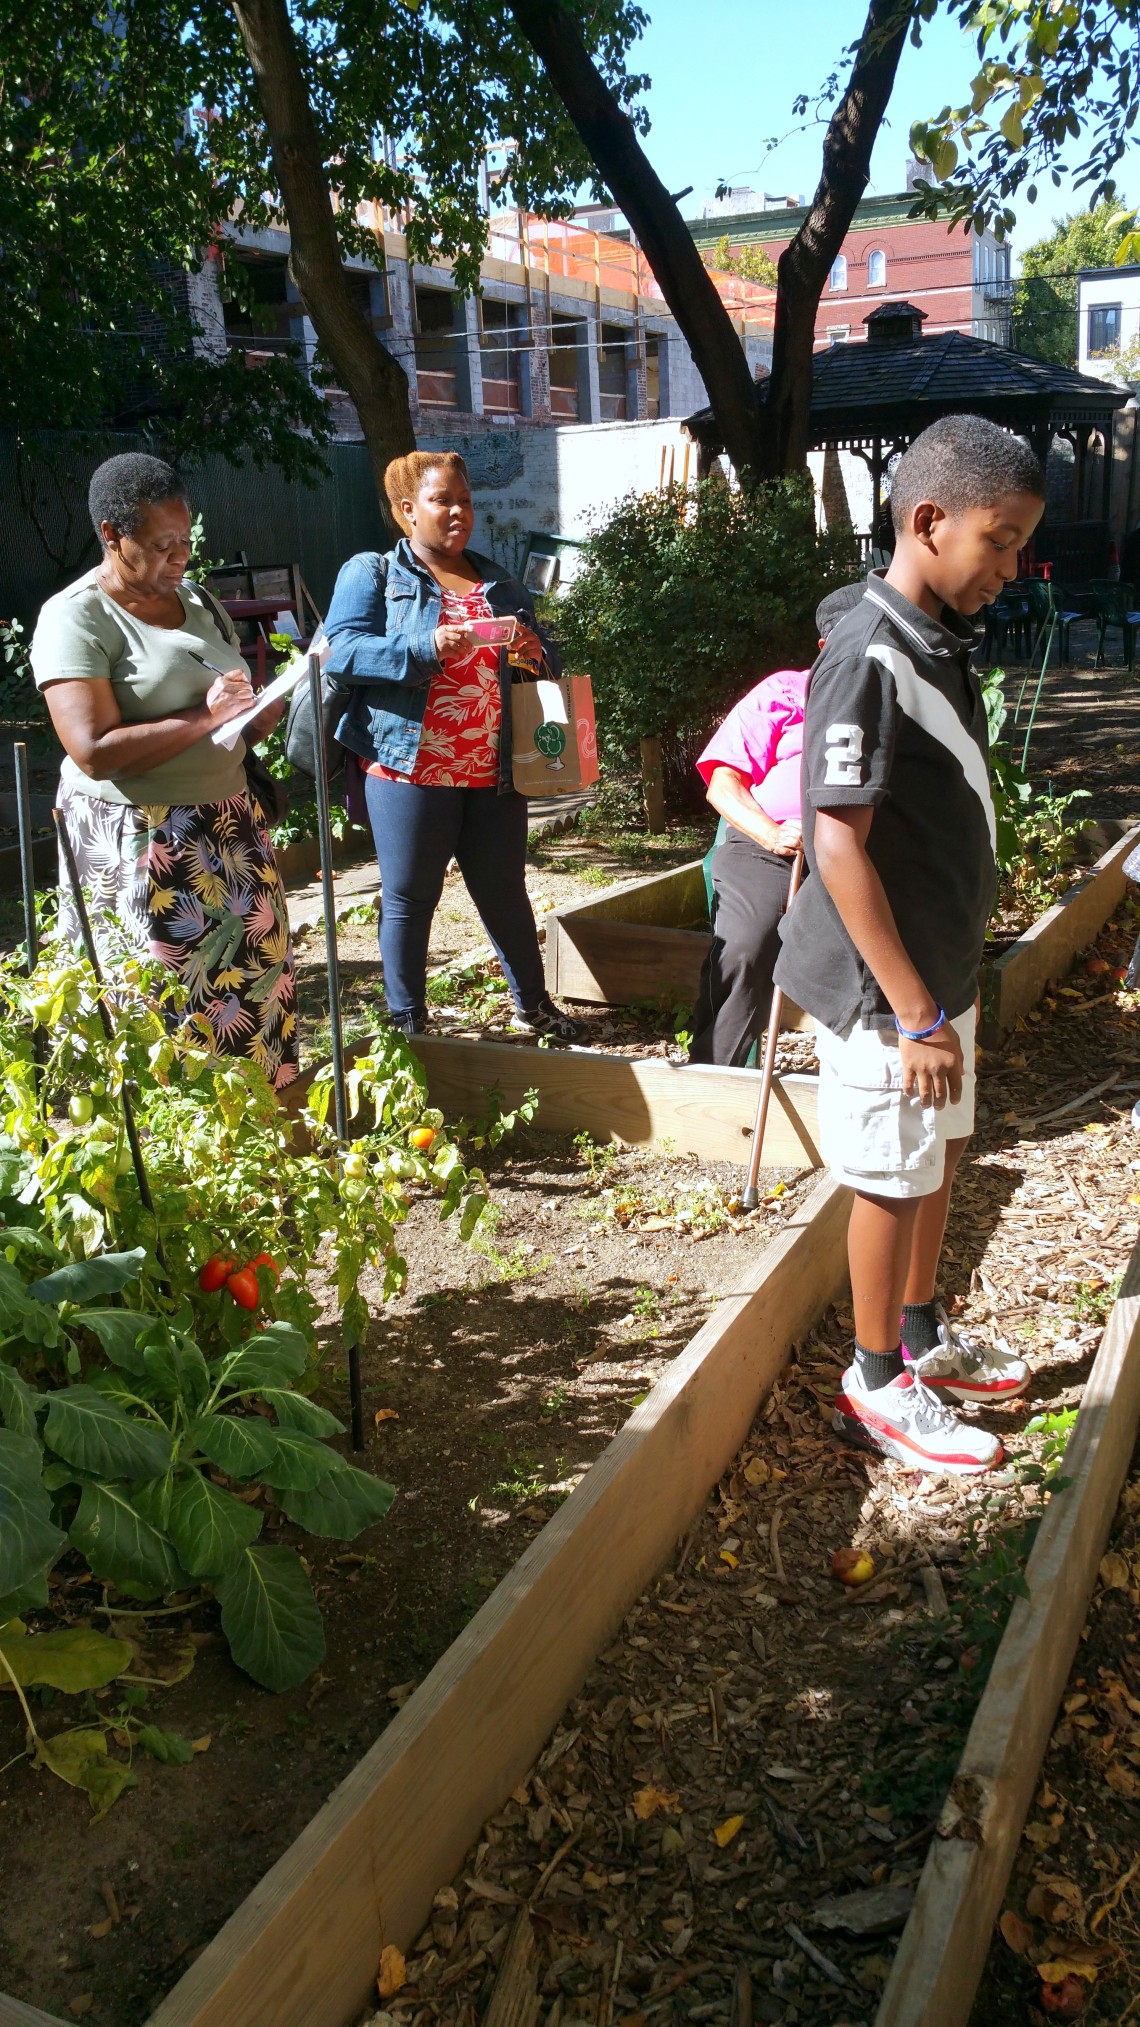 RoboRebels Team attend & participate in Fall Gardening Workshop @ First Quincy St Community Garden, Bklyn